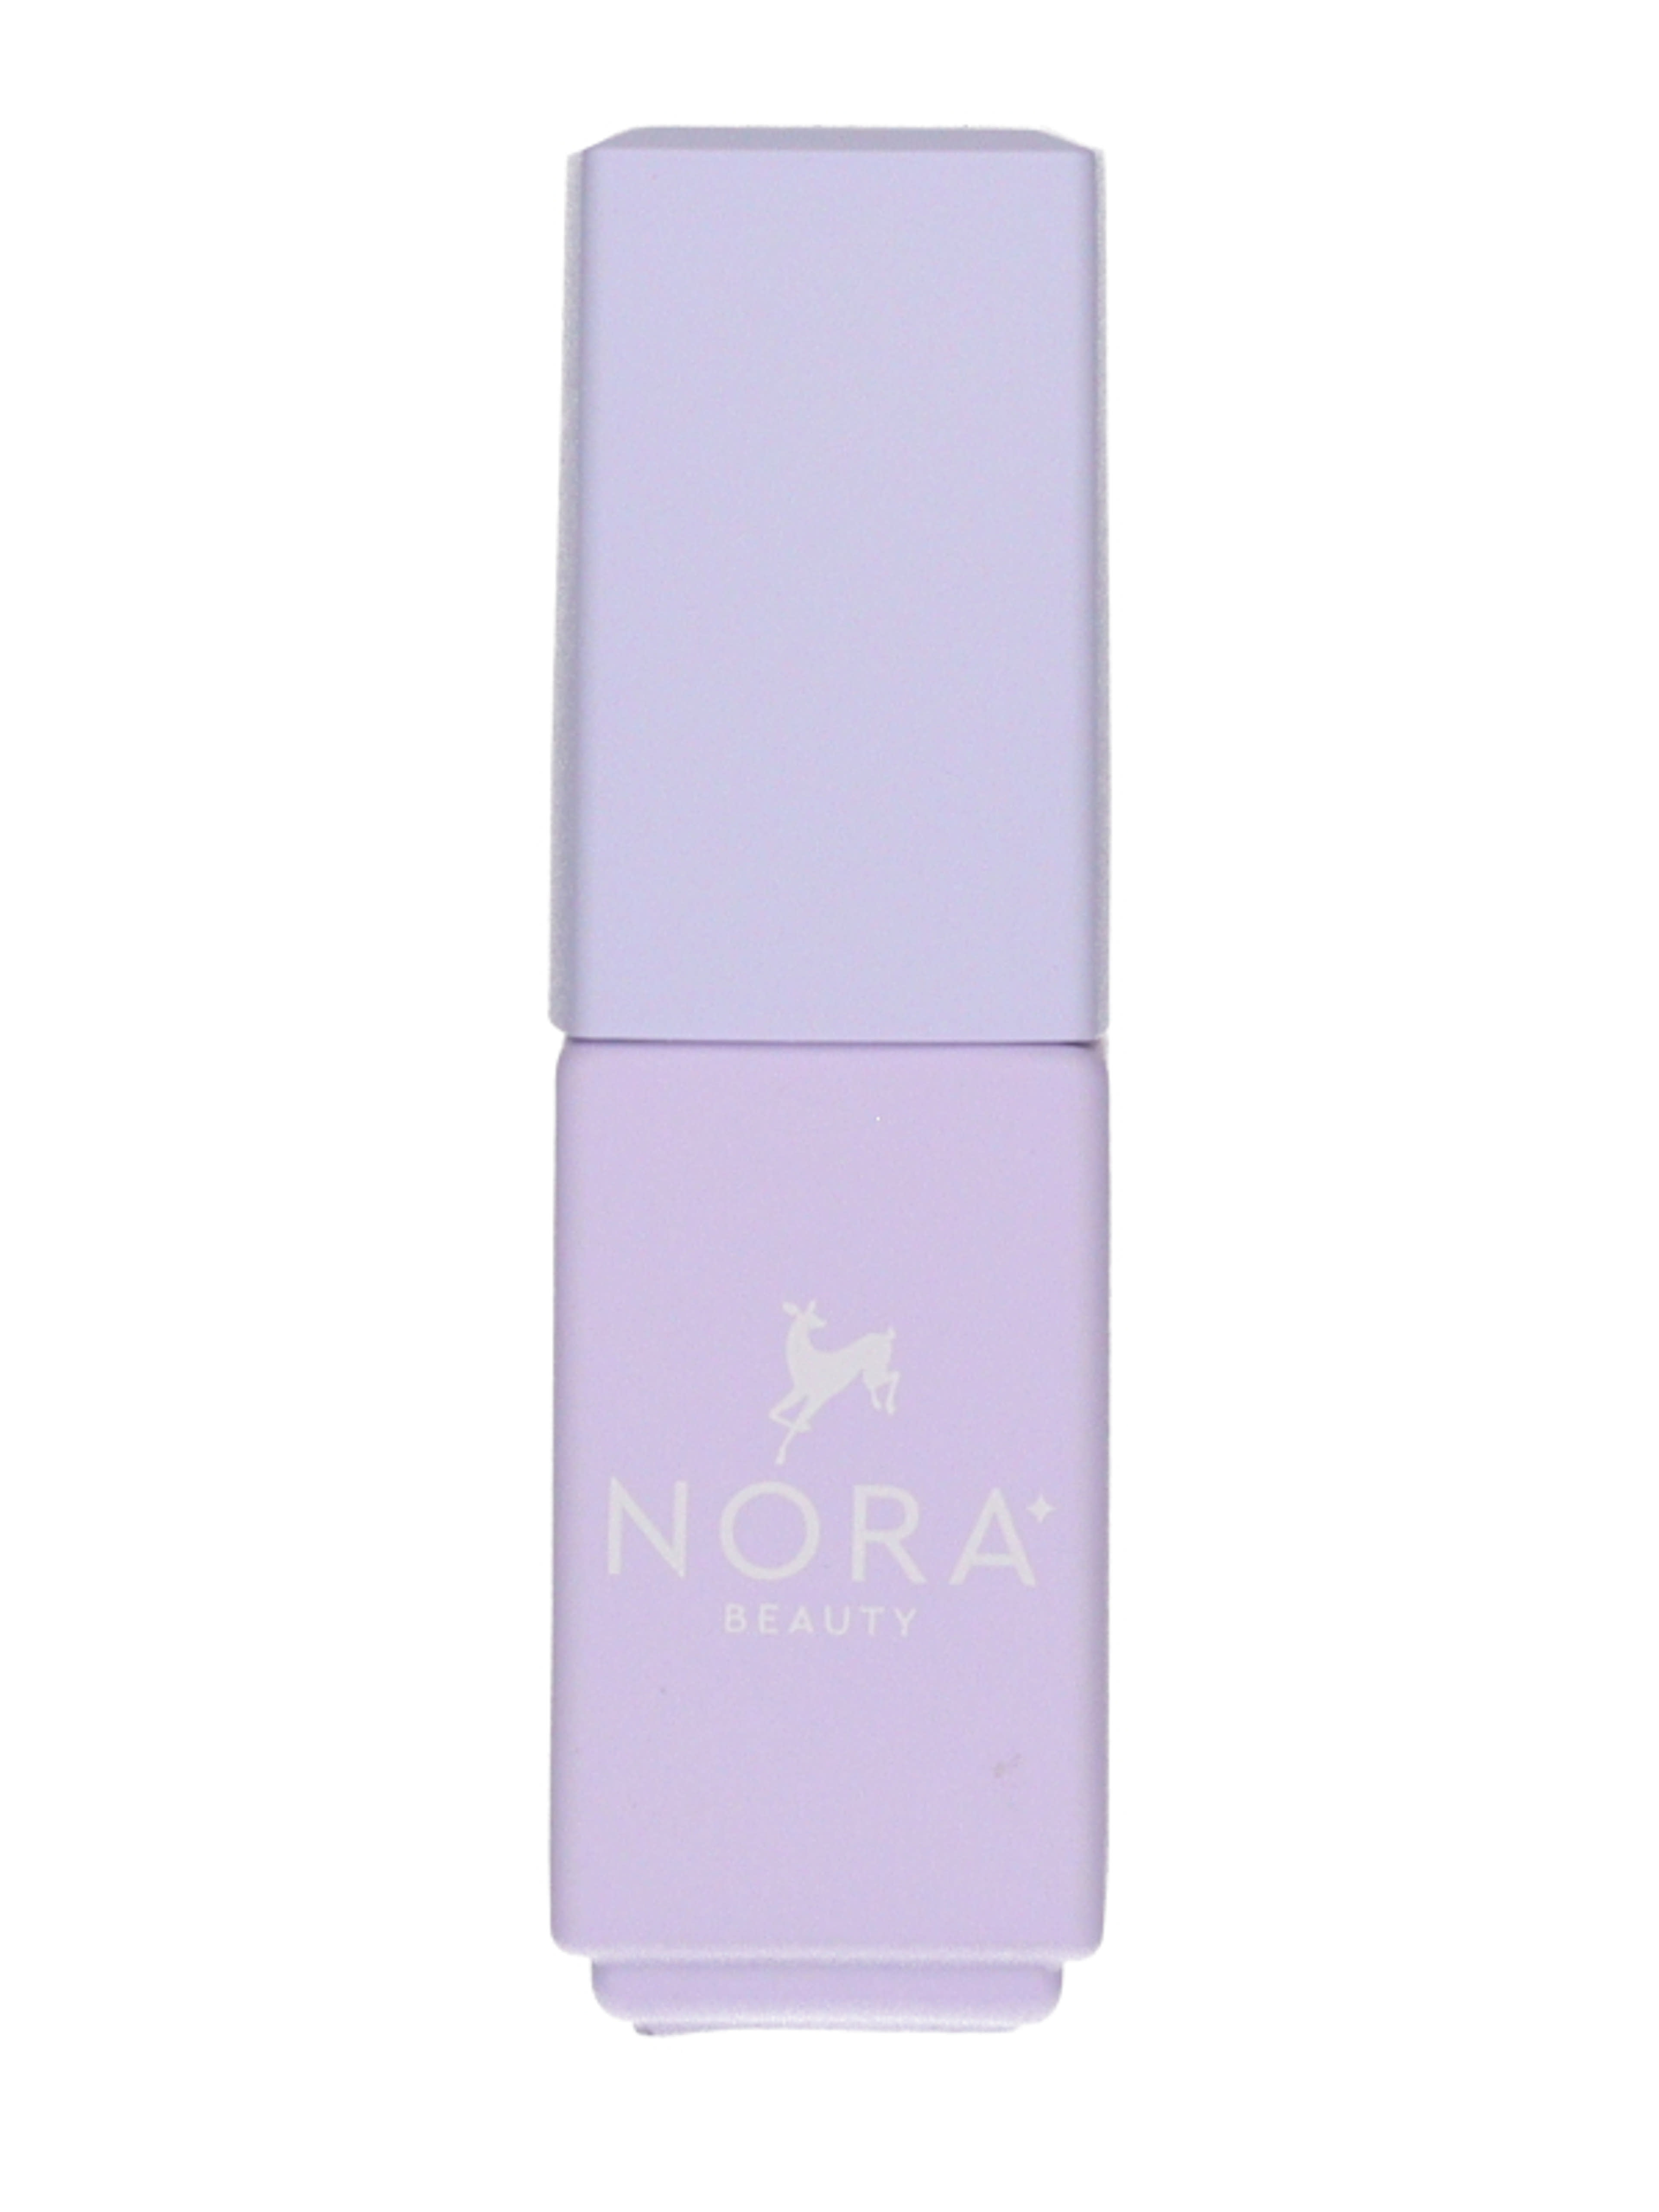 Nora Beauty UV lakkzselé /se-01 sweet candy - 1 db-3